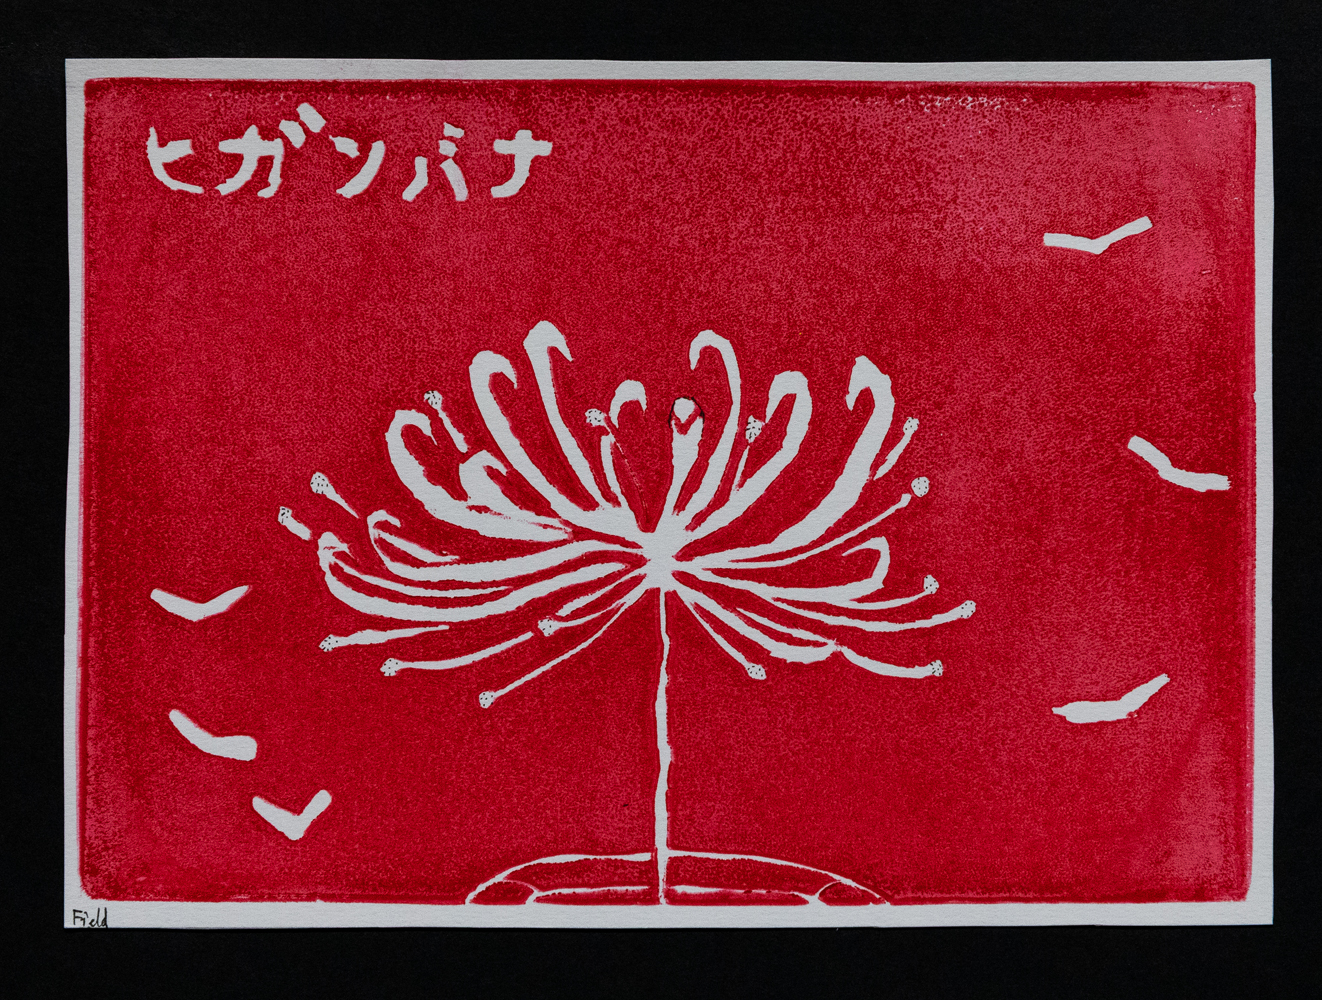 42. Lachlan Cohen, 'A peaceful crimson', linoprint, Year 9, Farrer Memorial Agricultural High School